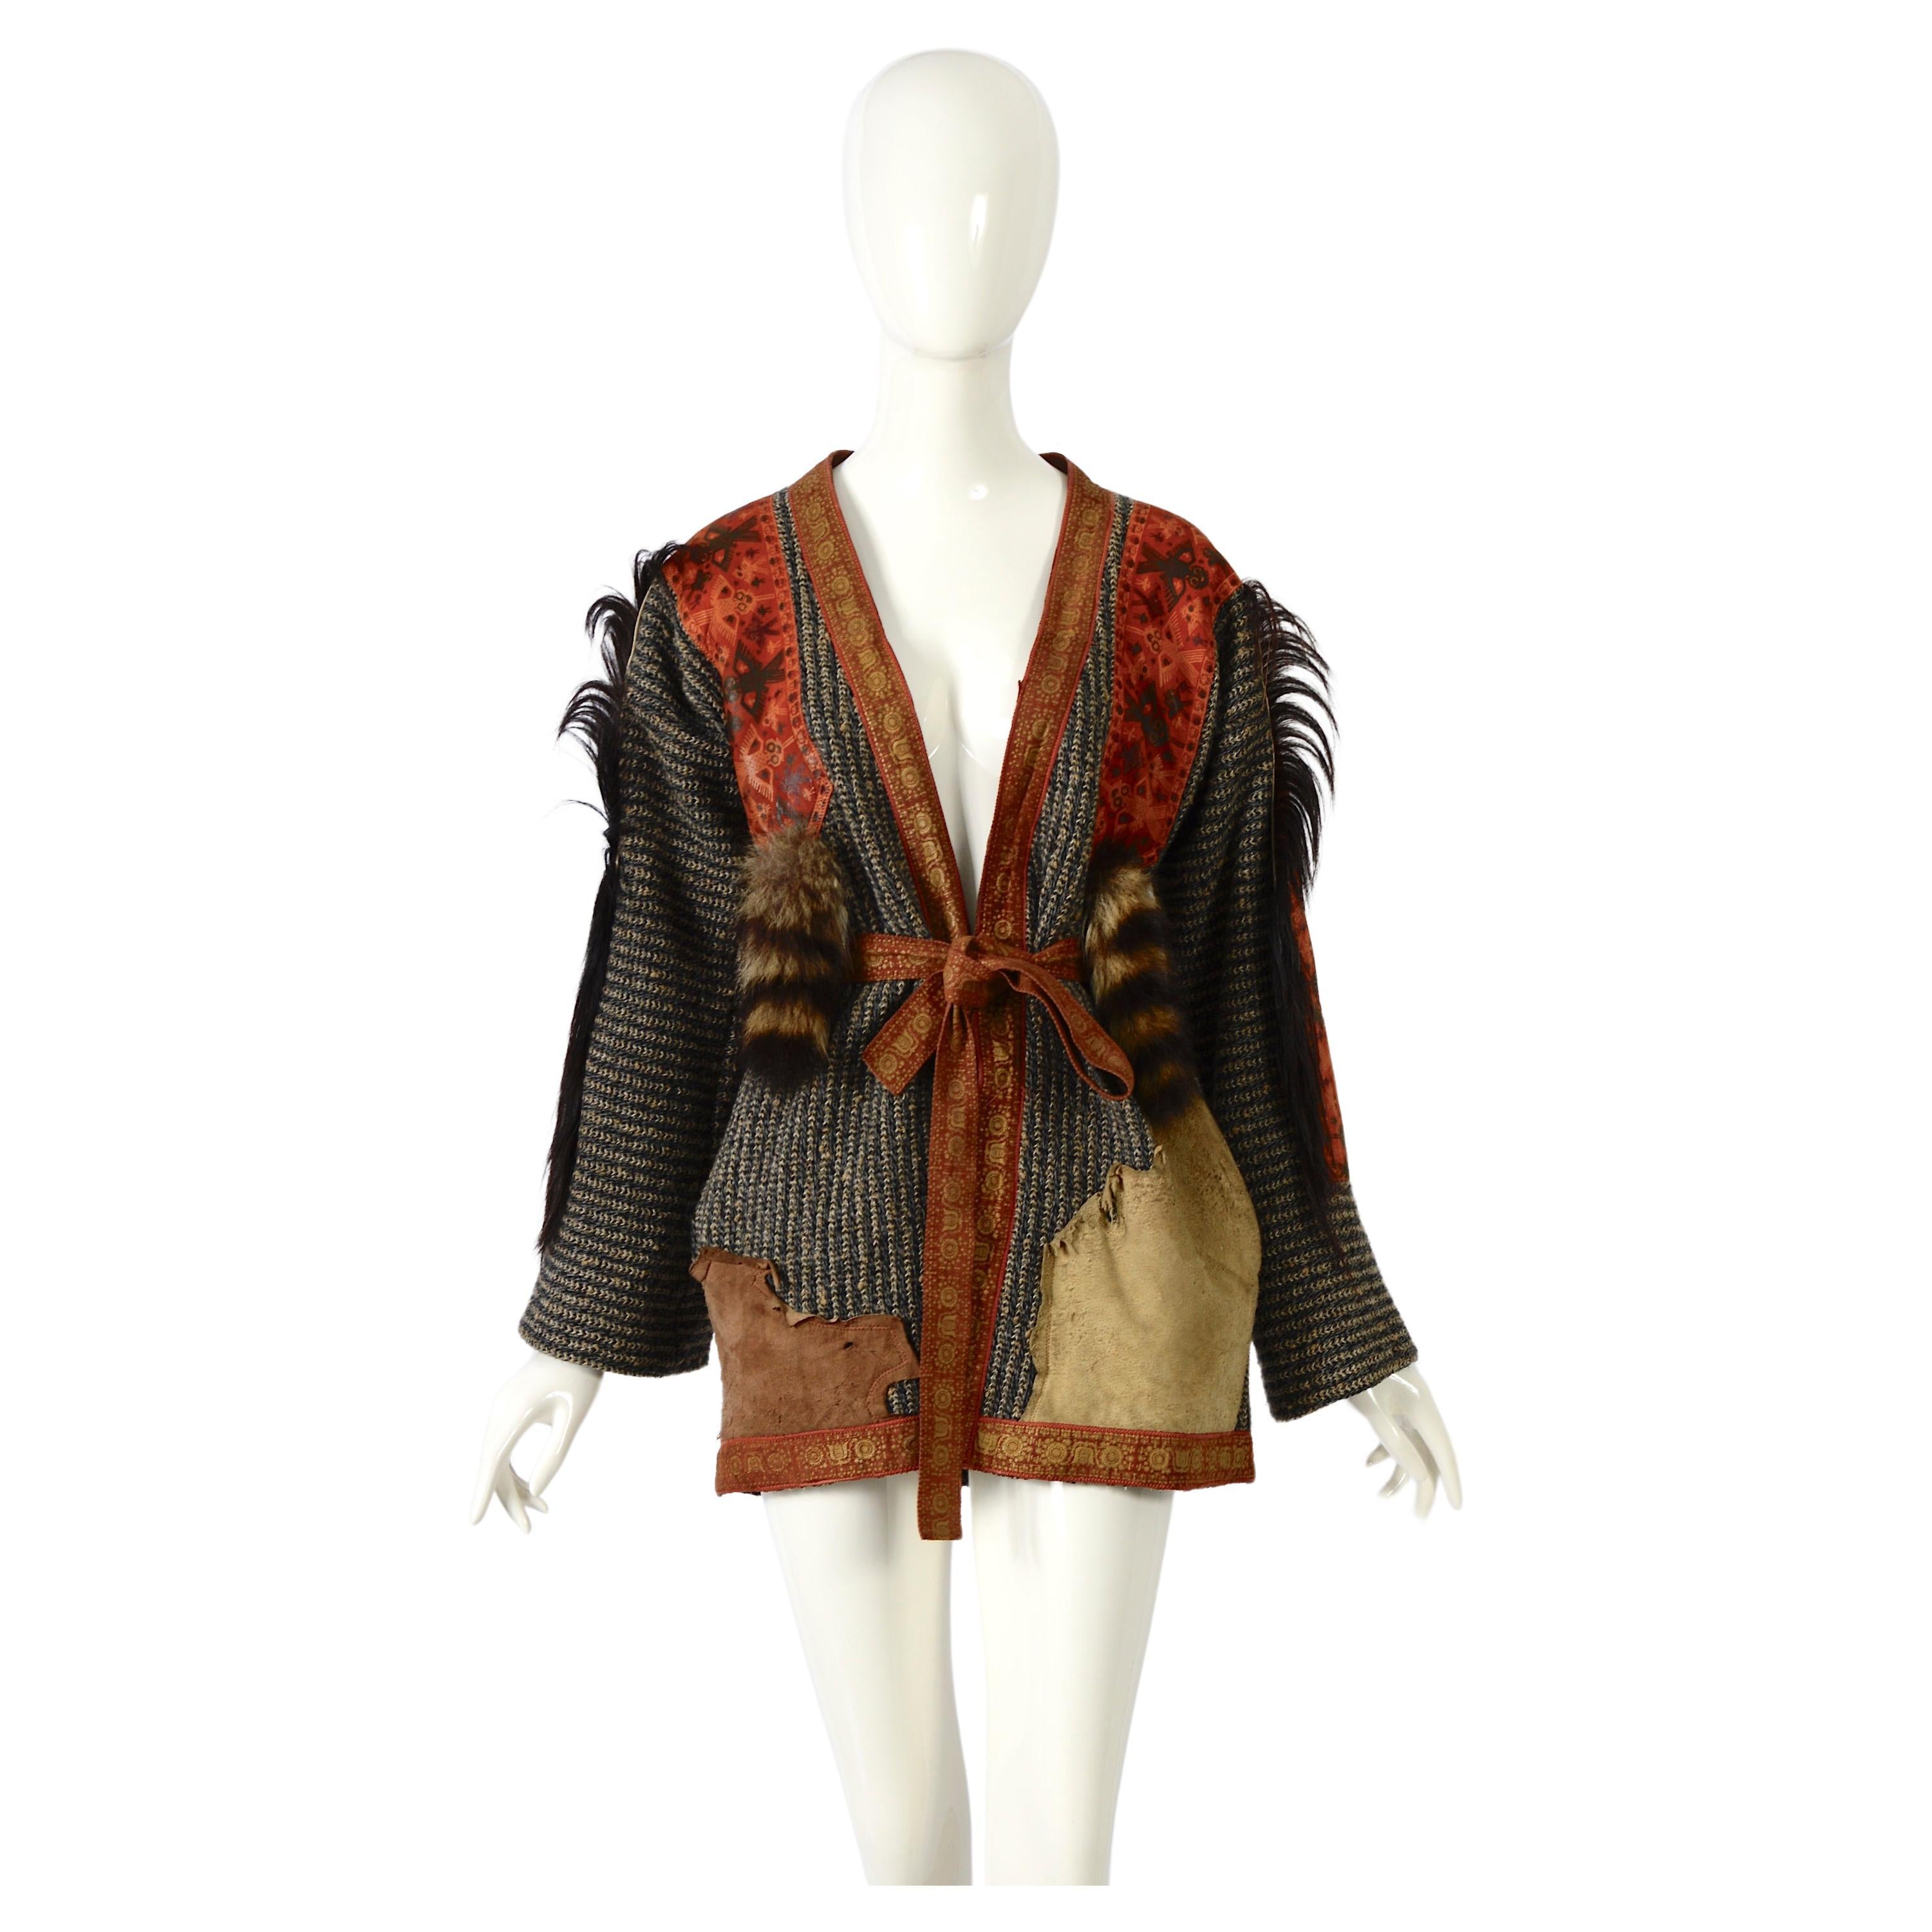 Roberto Cavalli Museum-Worthy 1971 Patchwork Debut Kollektion Vintage Jacke  im Angebot